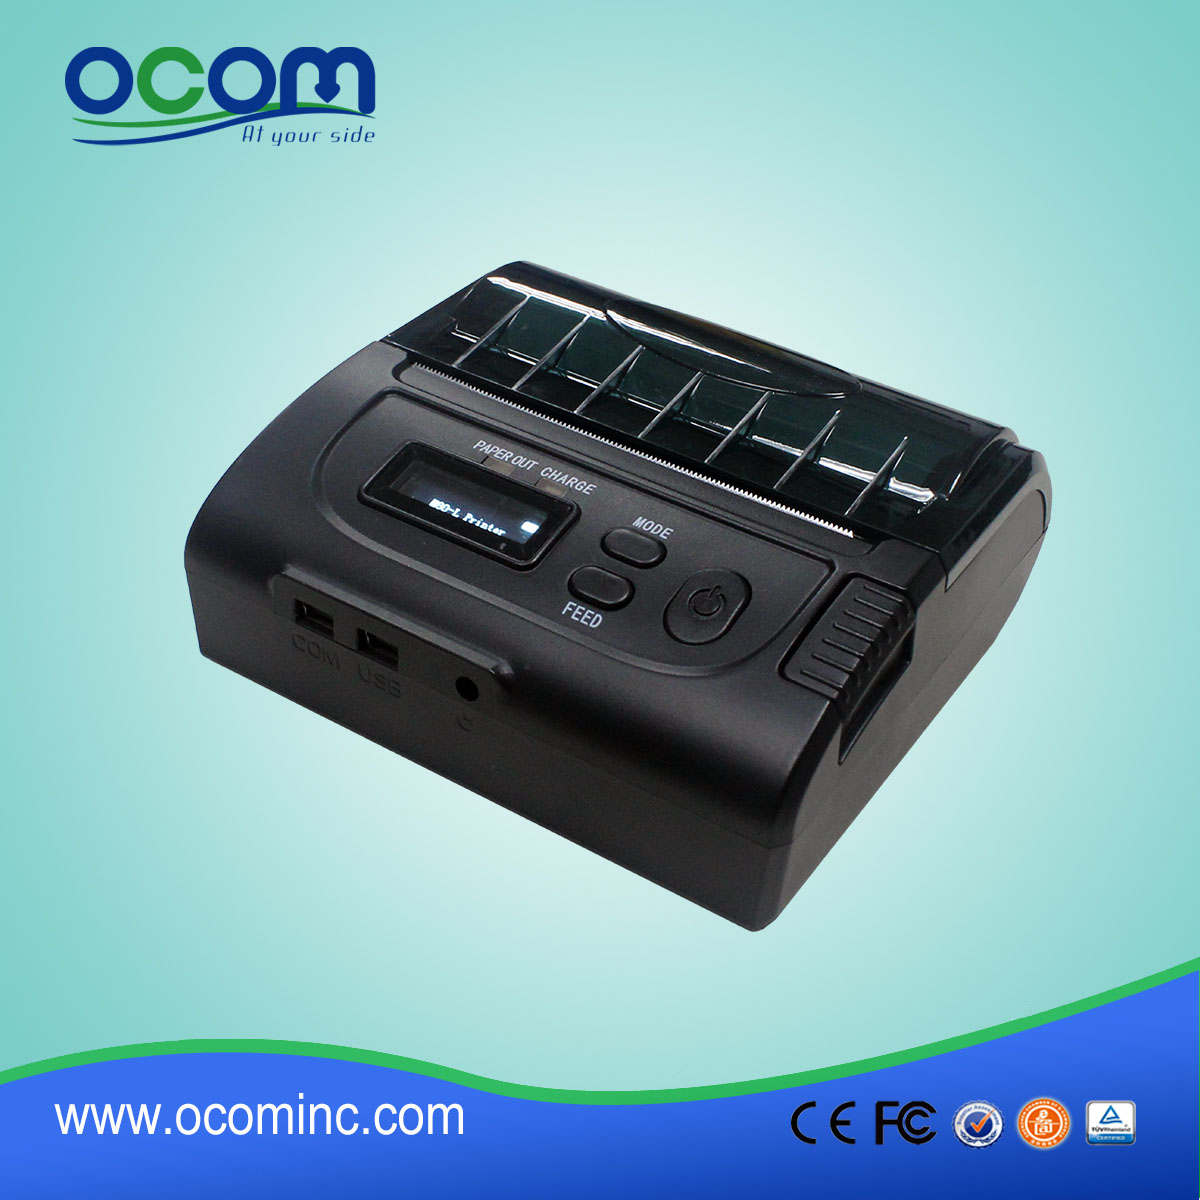 OCPP-M083 80mm WIFI Bluetooth Portable Thermal Receipt Printer